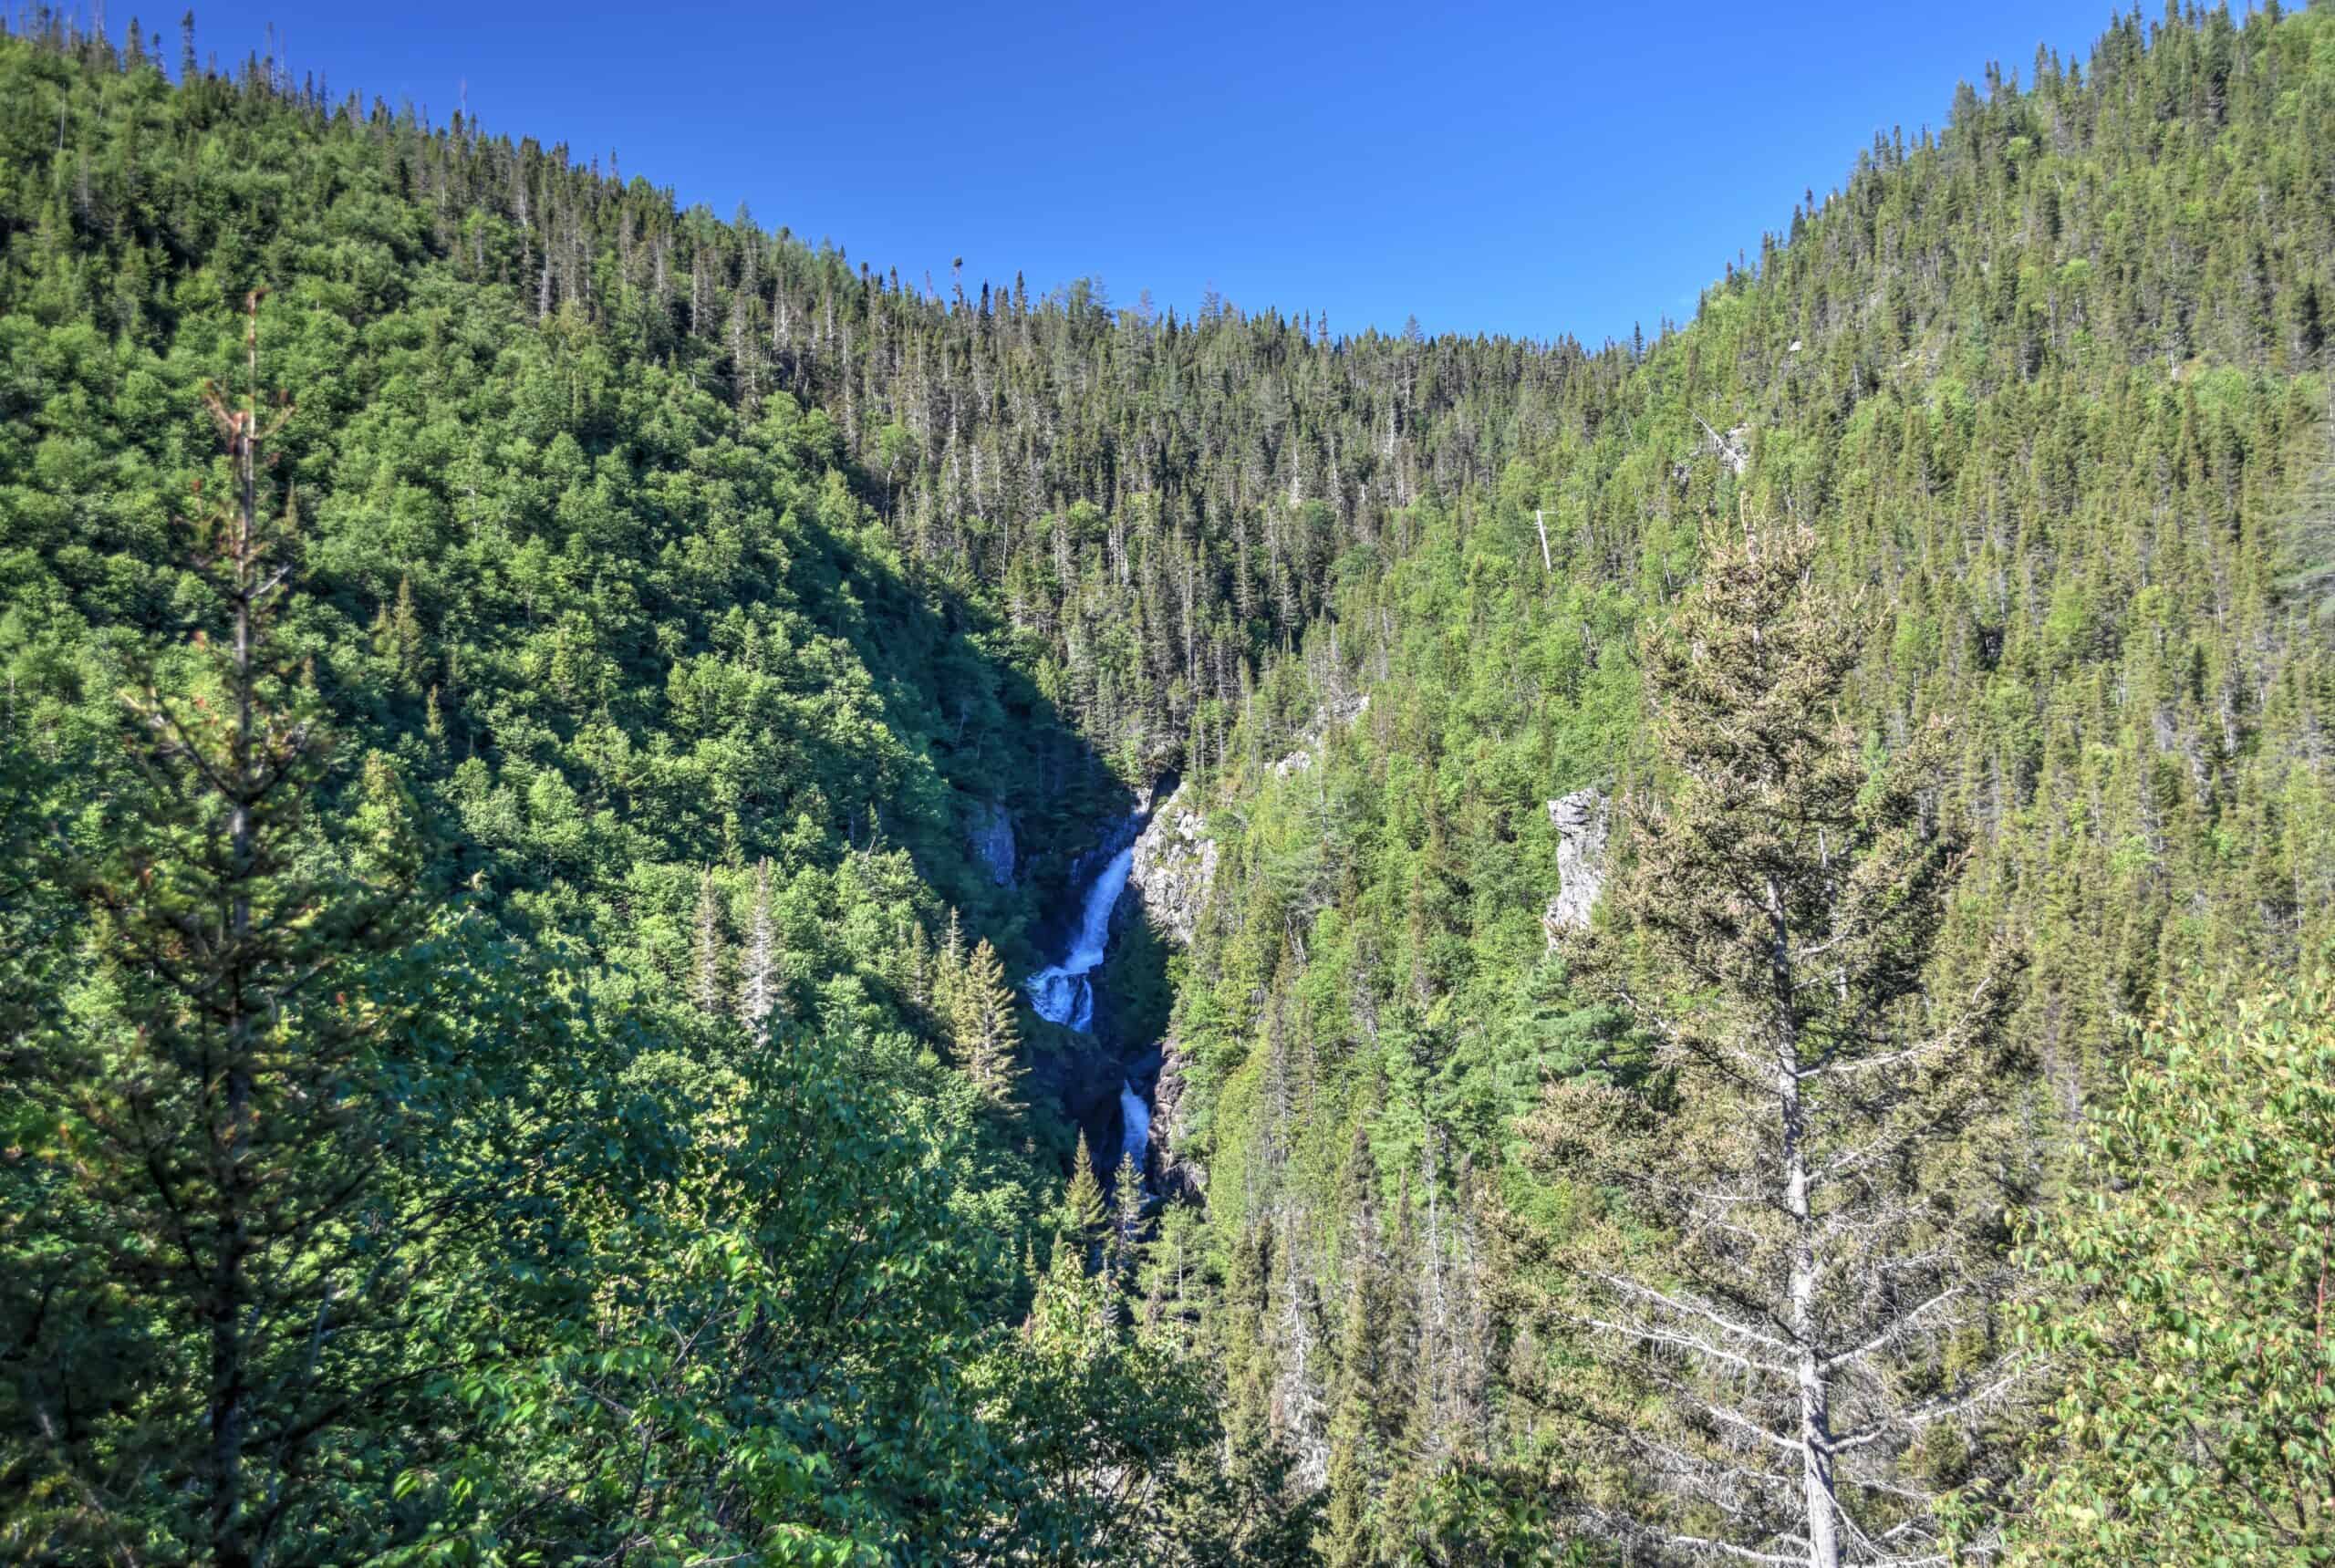 Chute-du-Diable Falls in gaspésie national park